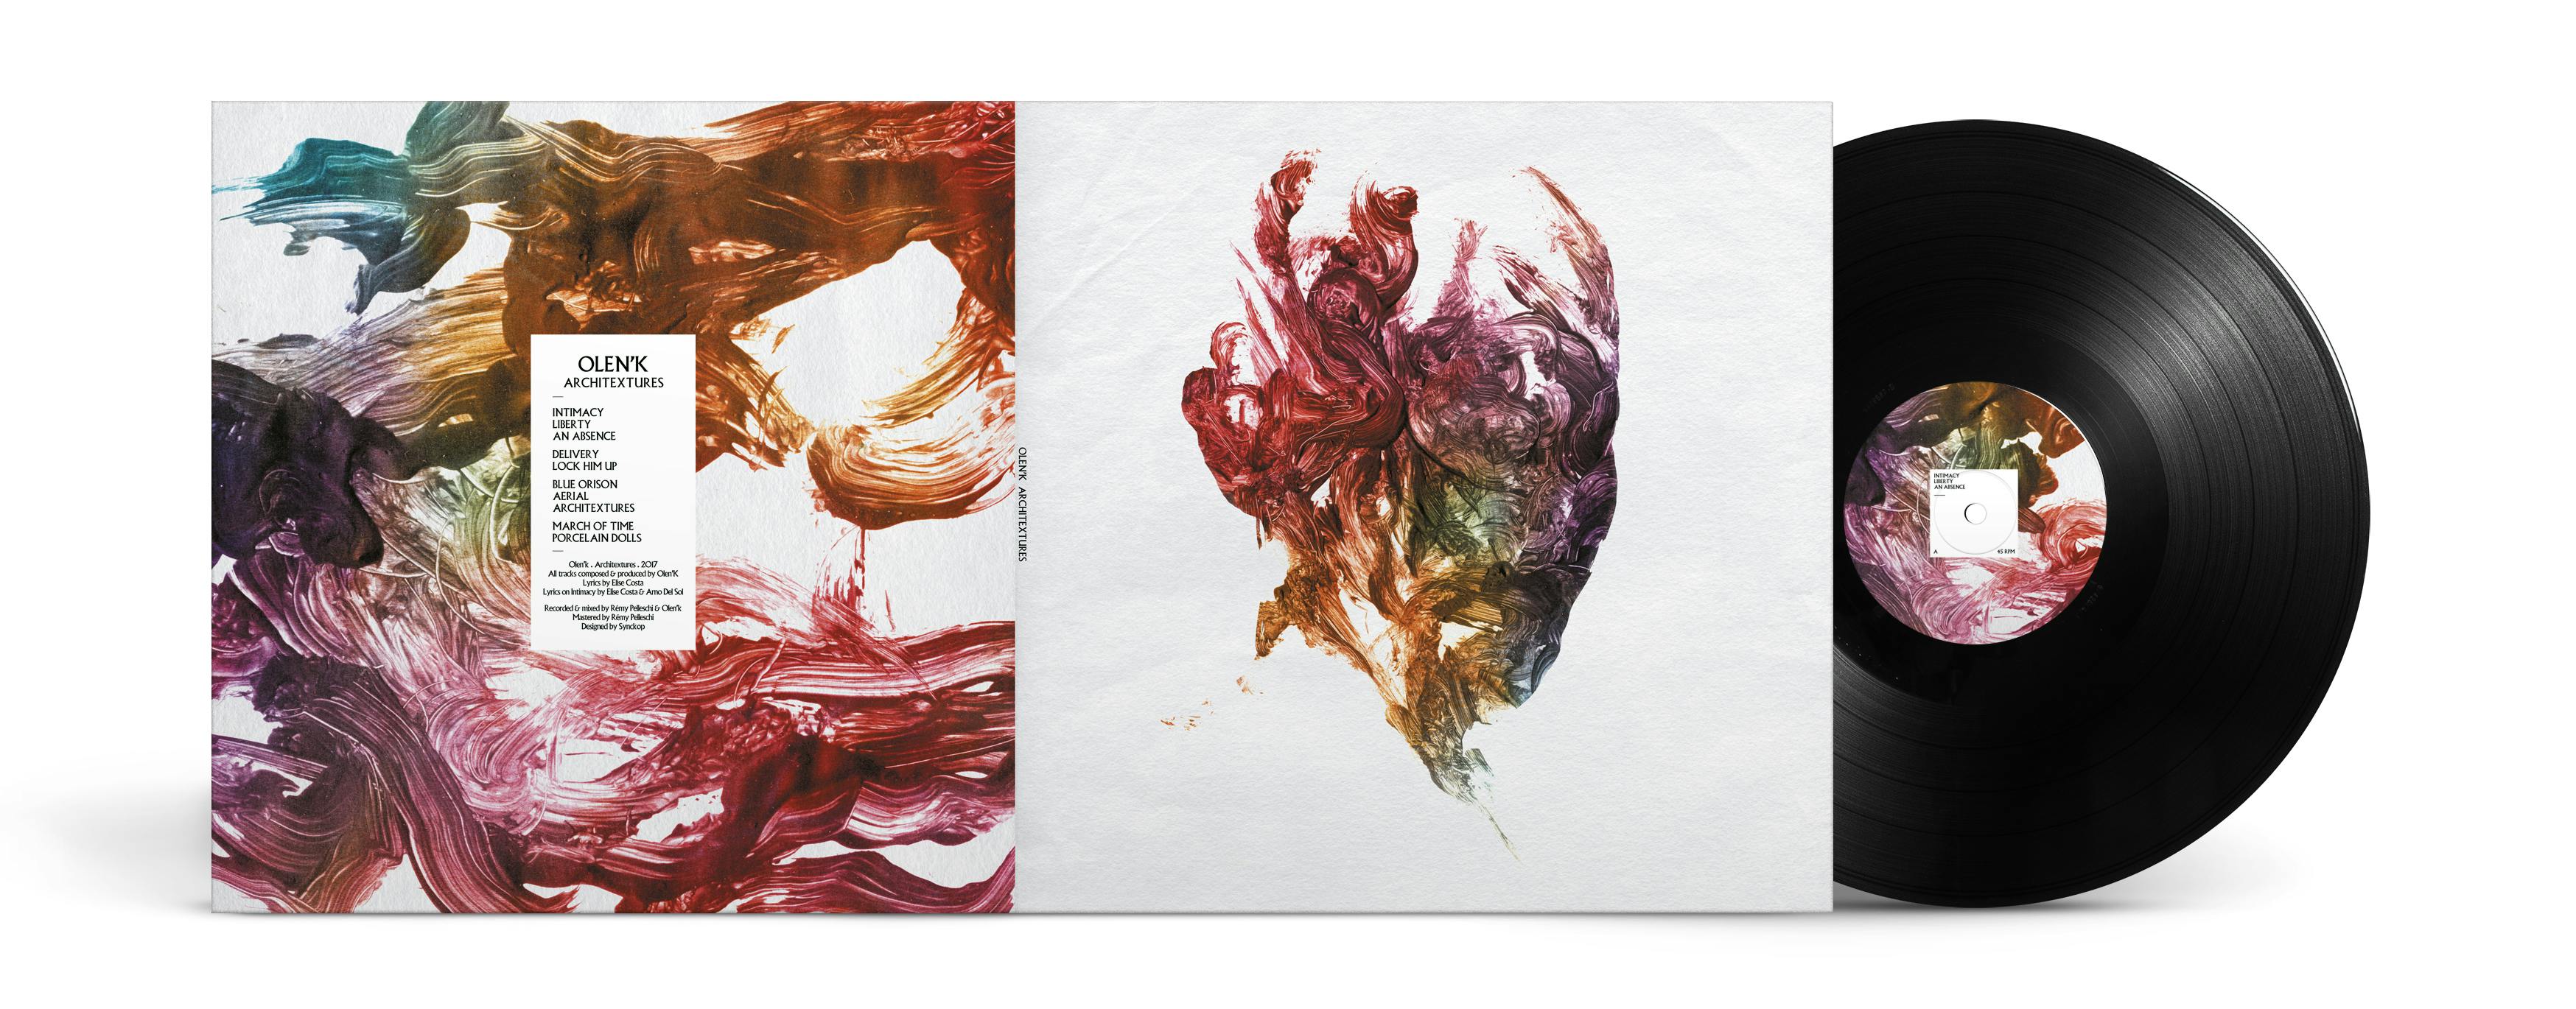 synckop; olen'k; design; color; abstract; painting; new wave; vinyl; design; illustration